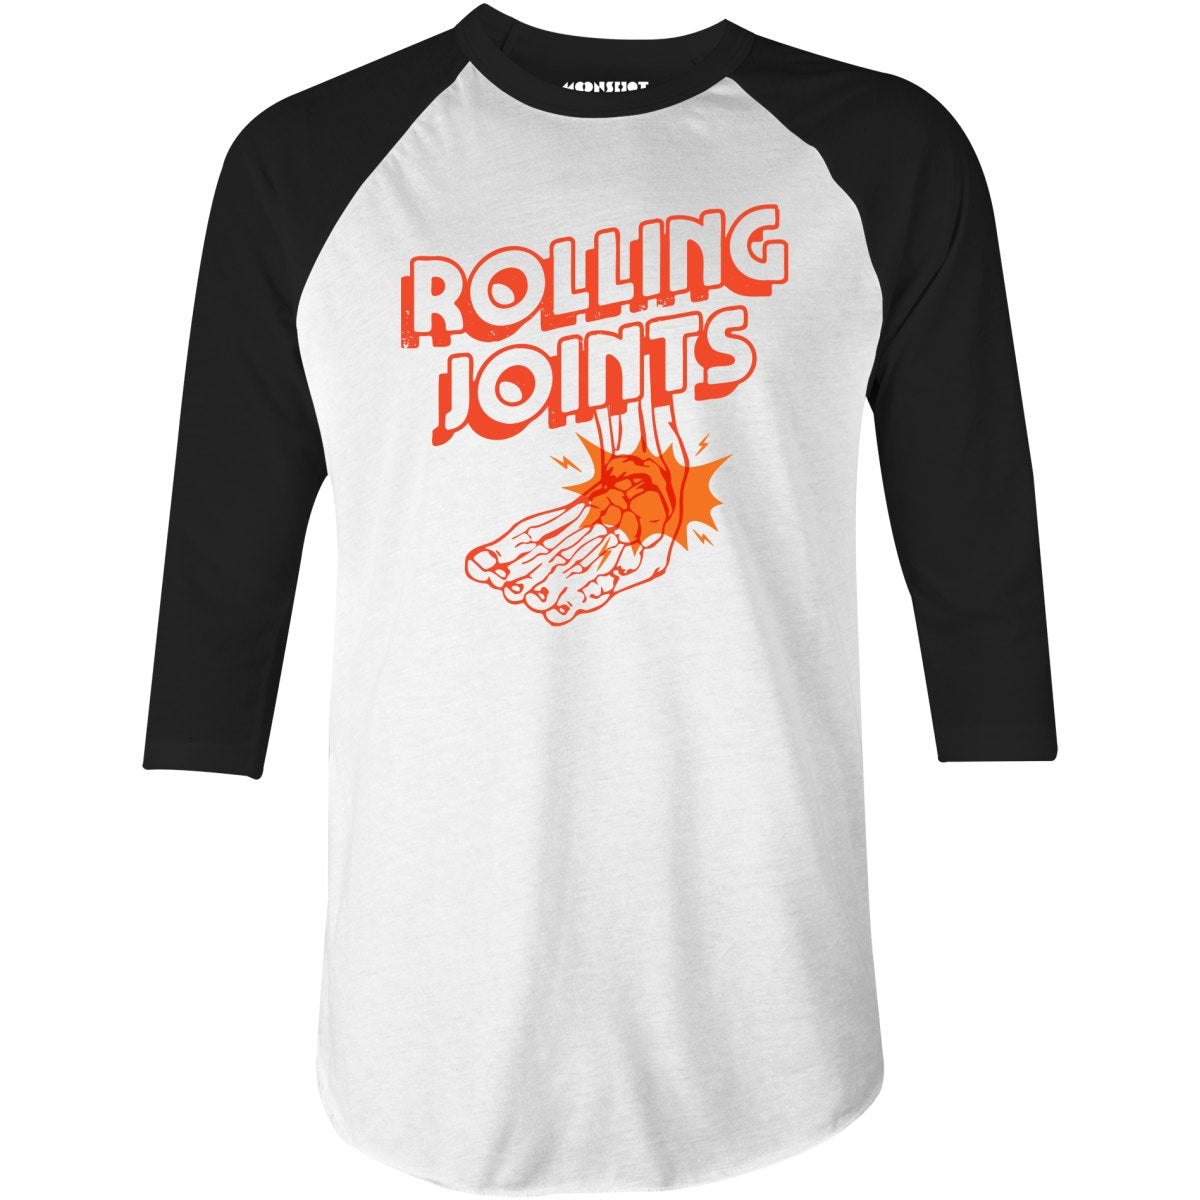 Rolling Joints - 3/4 Sleeve Raglan T-Shirt